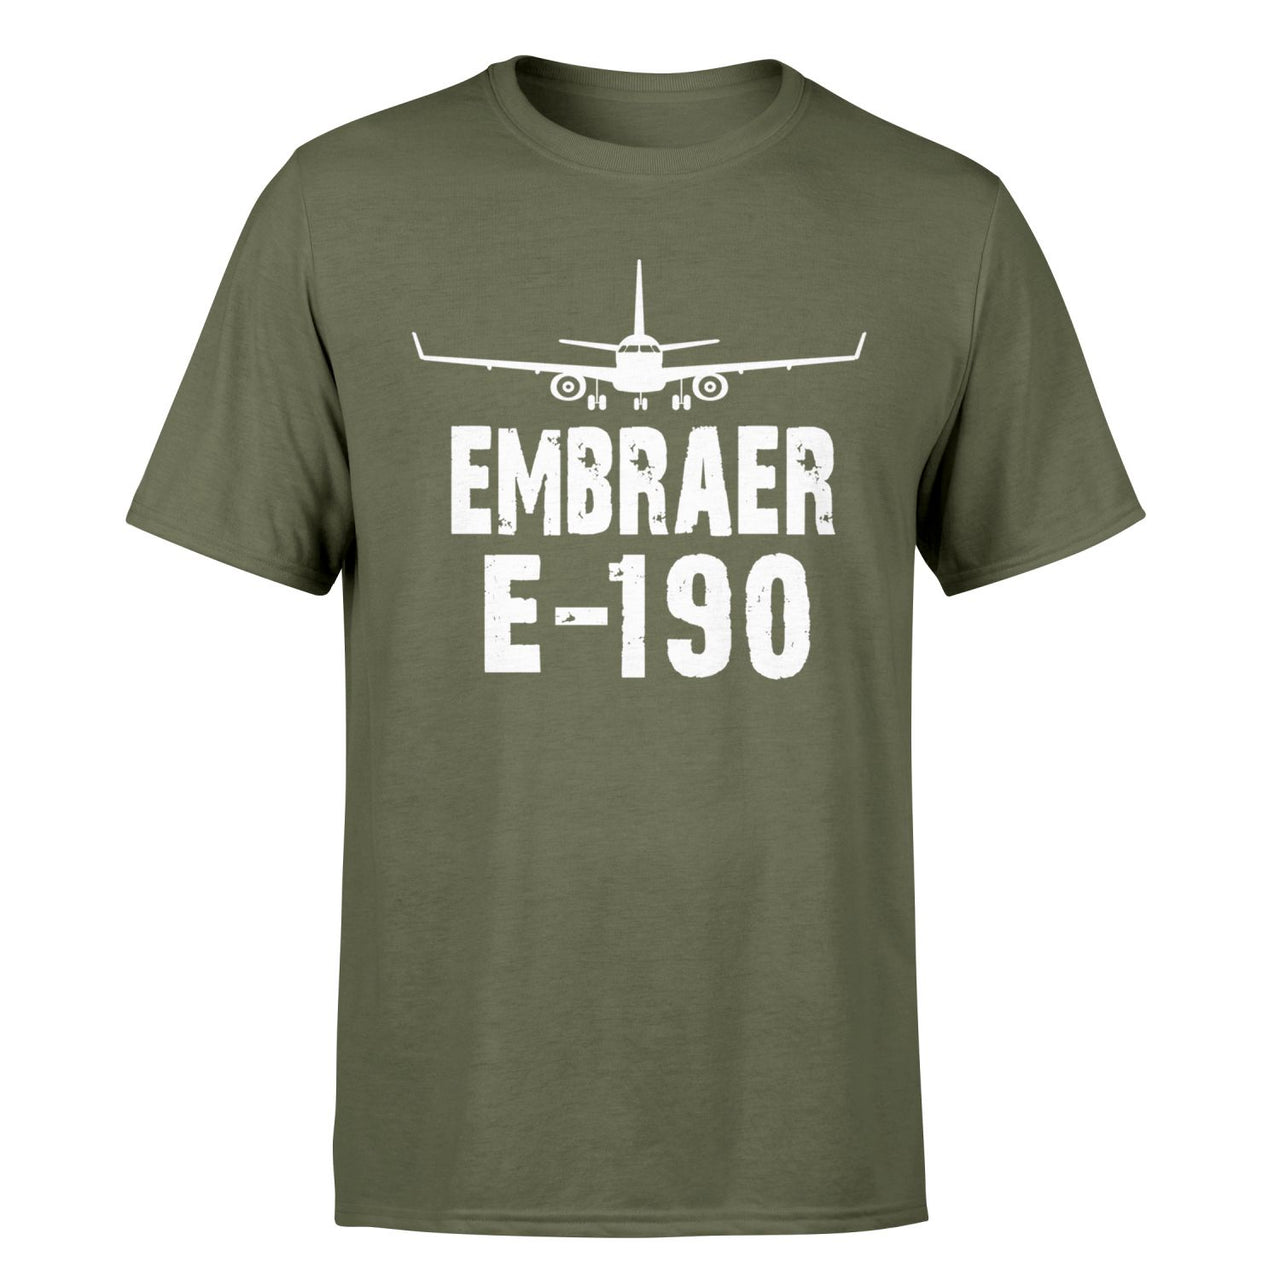 Embraer E-190 & Plane Designed T-Shirts